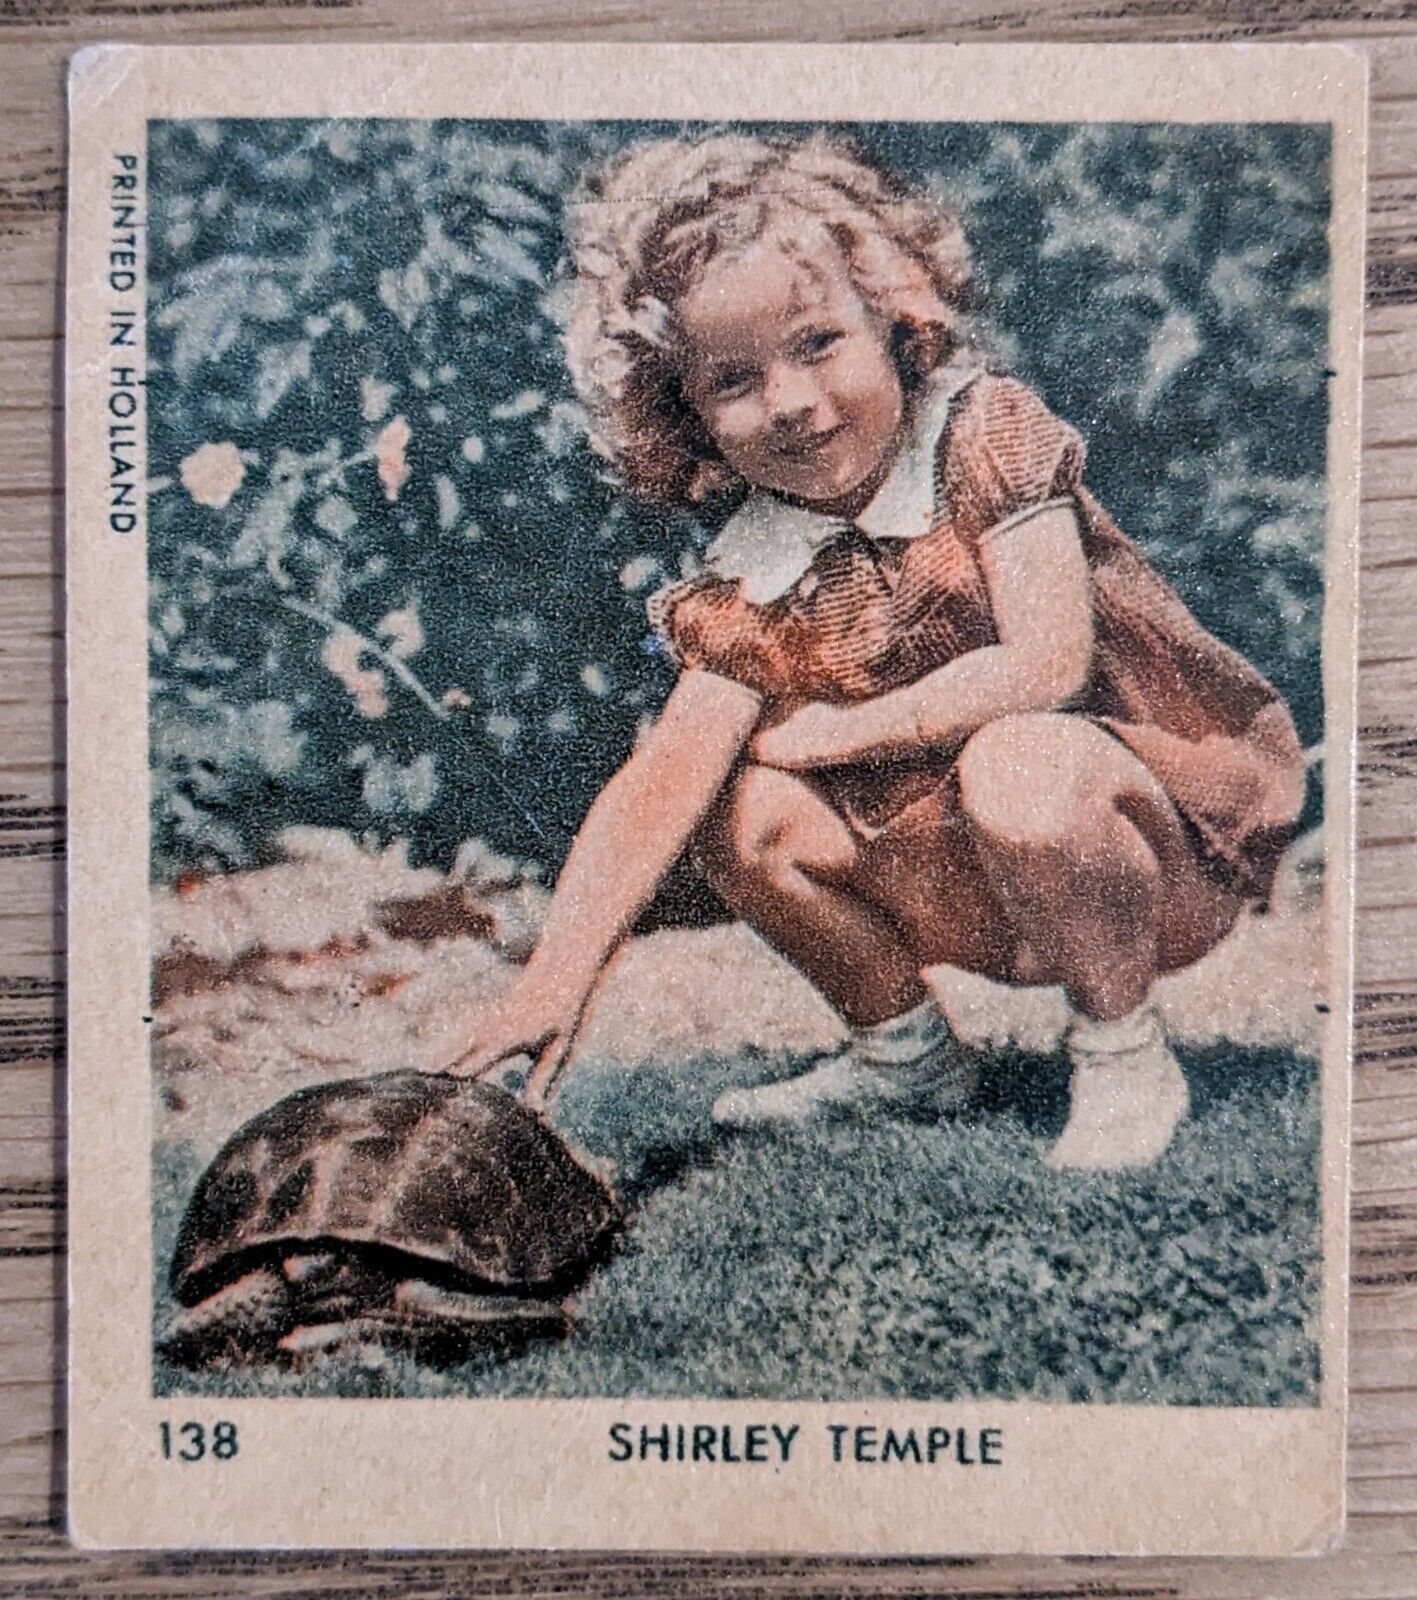 1935 Klene Gum Trading Card - Shirley Temple #138.